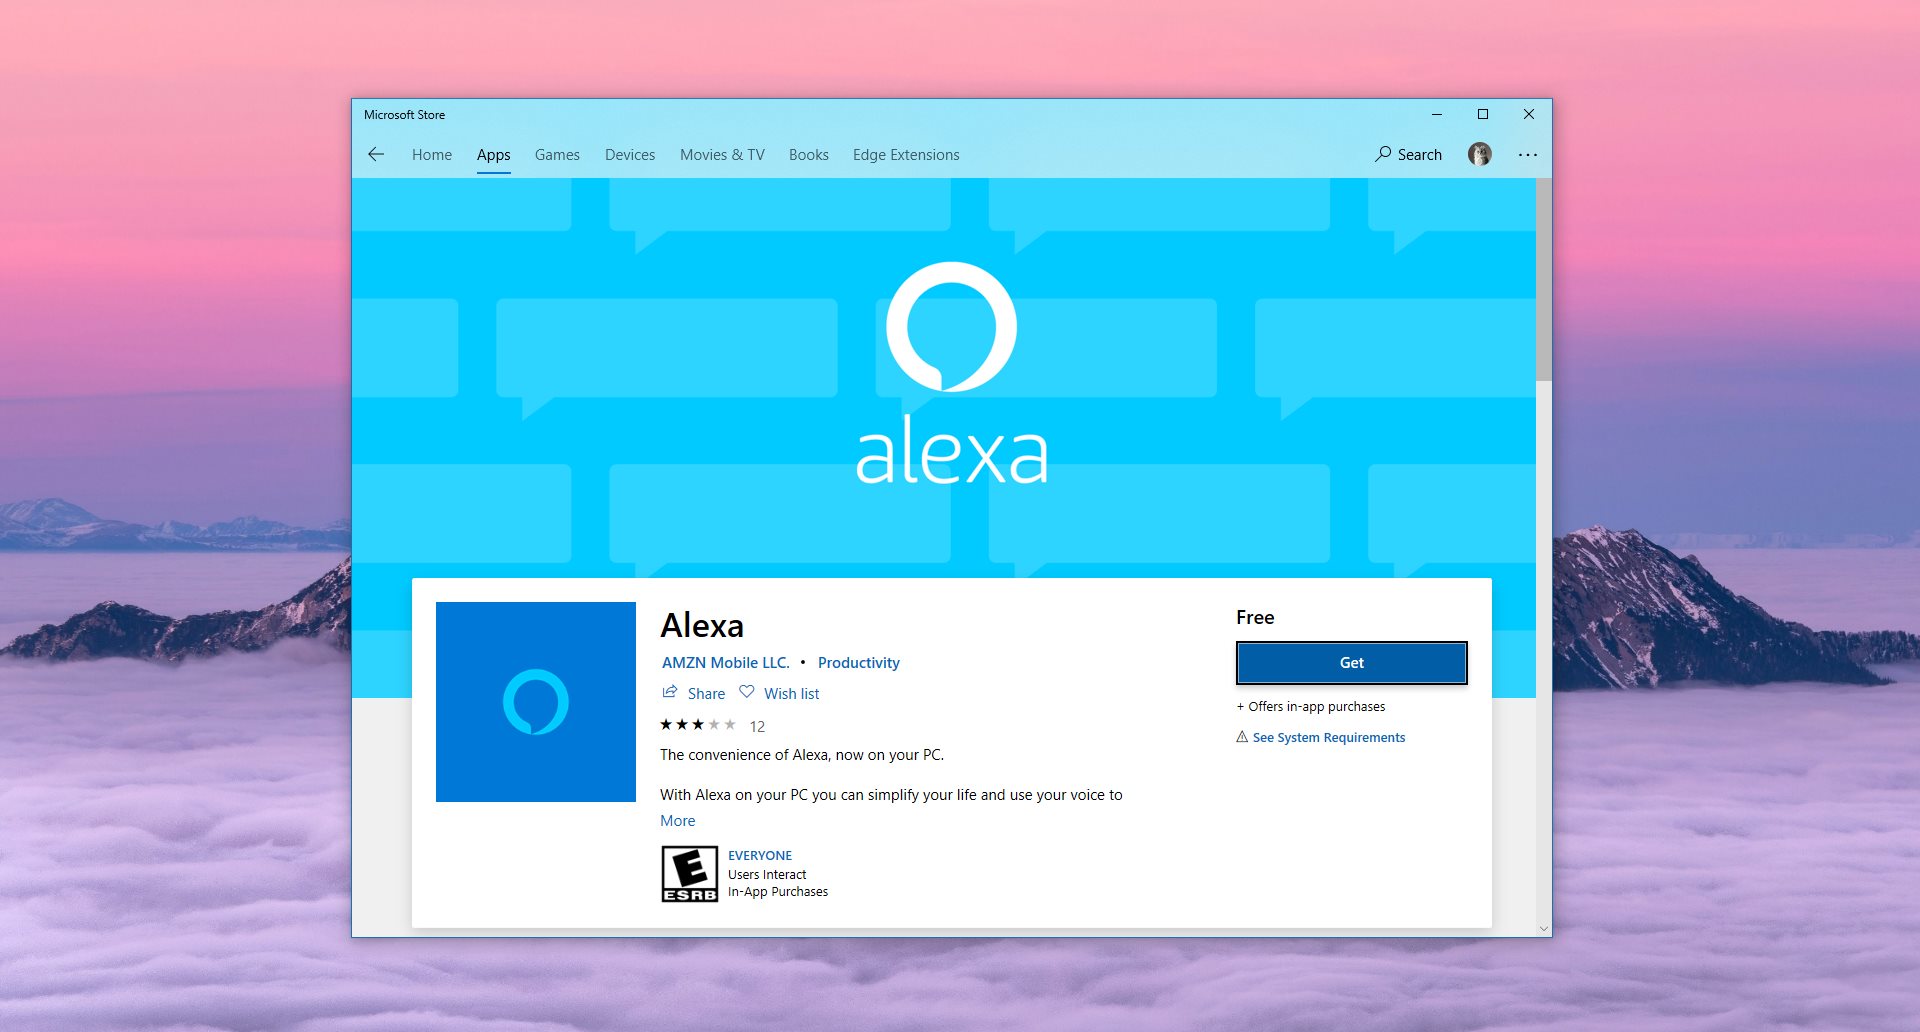 How to reinstall alexa app on windows?